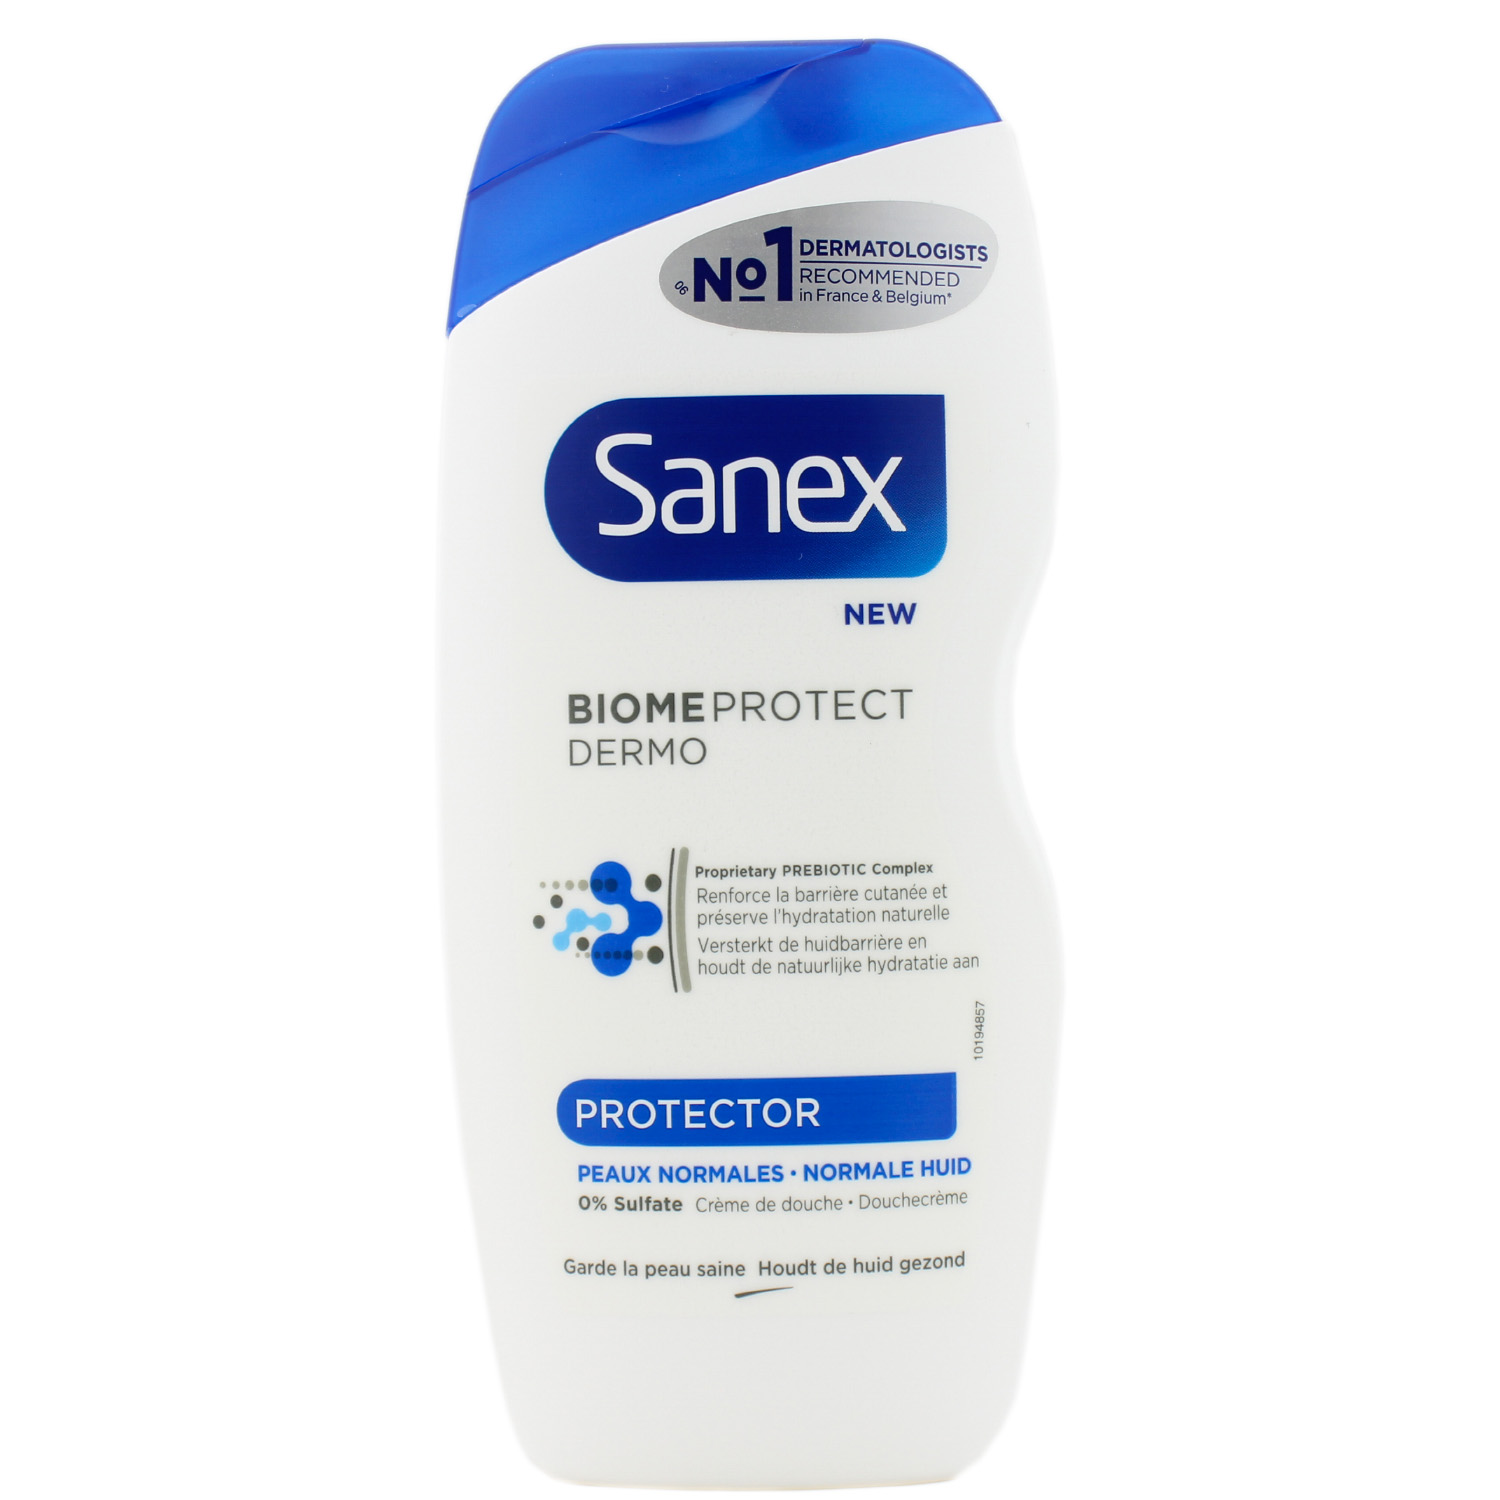 Sanex BiomeProtect Dermo Protector Shower Cream 250ml